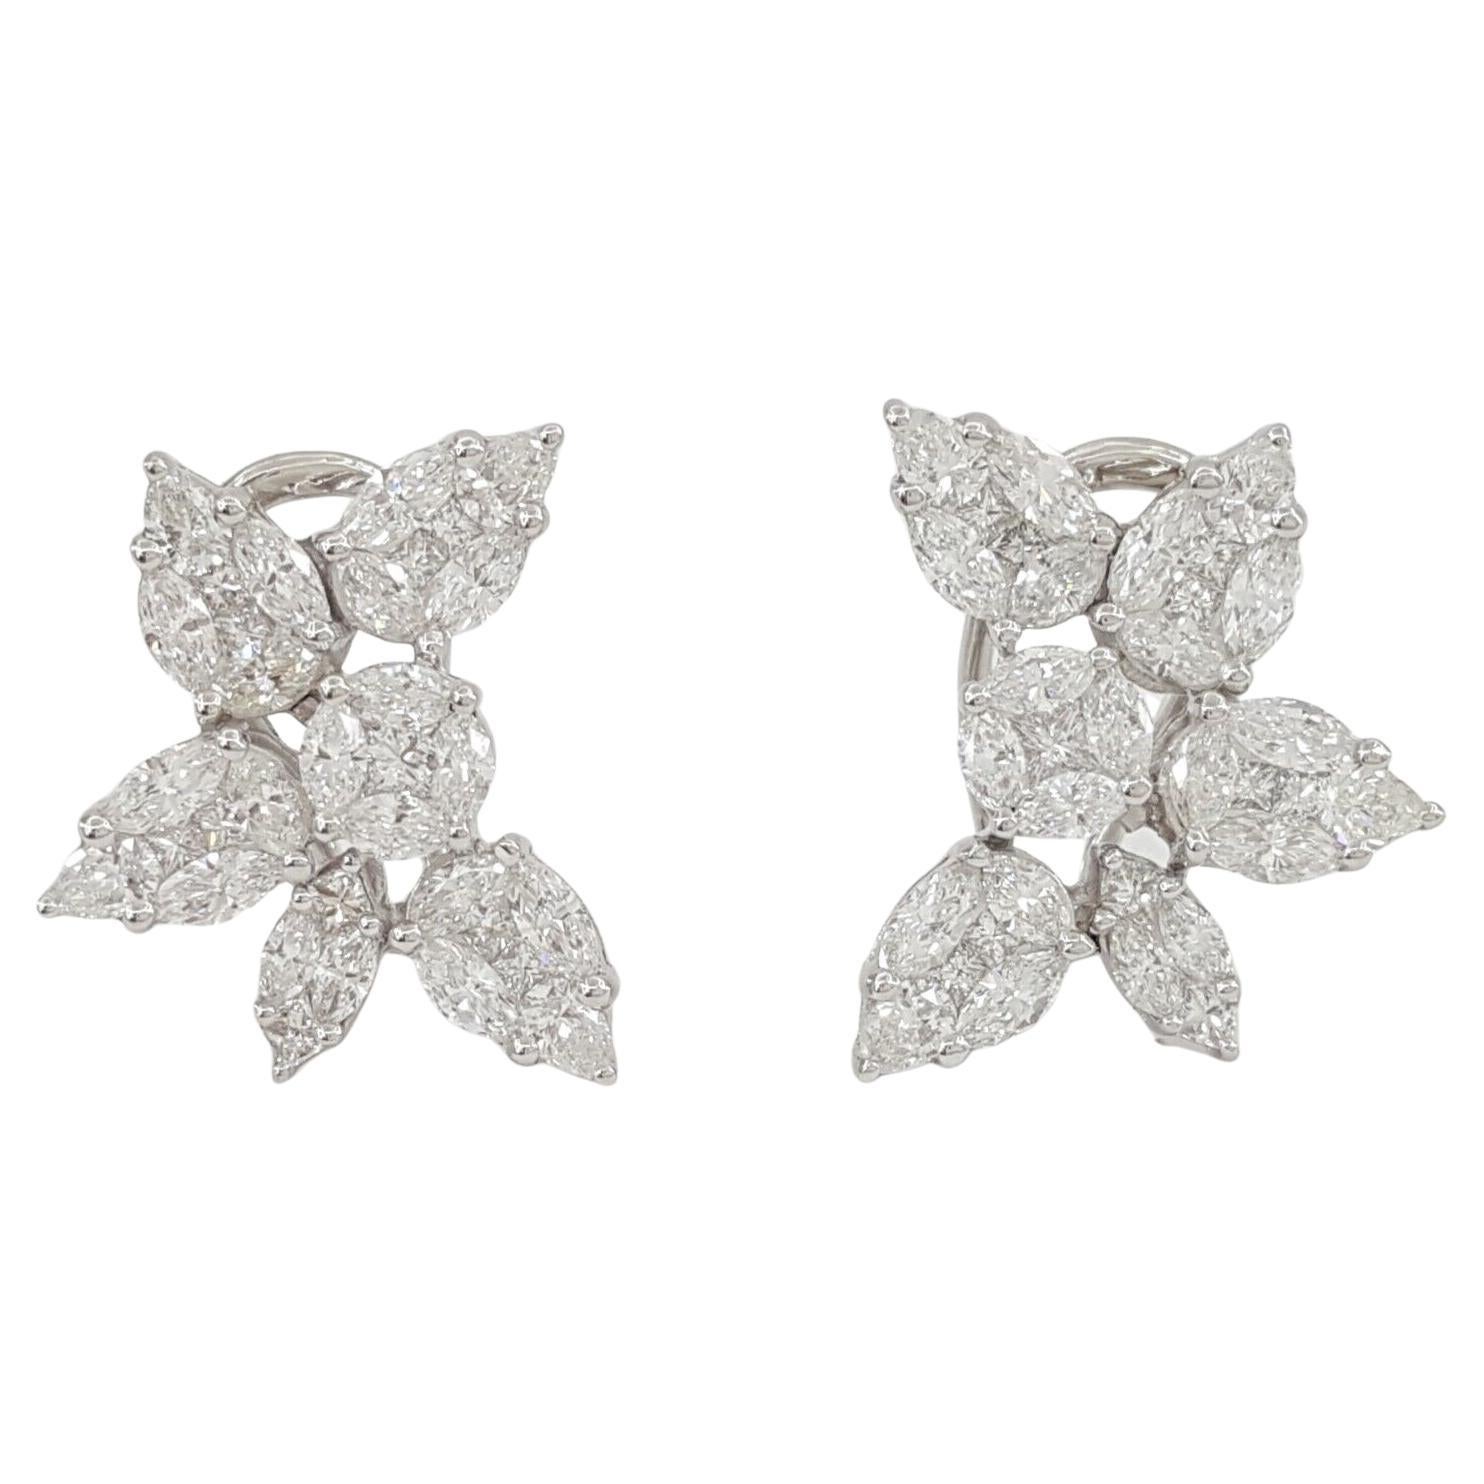 4 Carat Diamond Cluster Earrings E/F Color For Sale